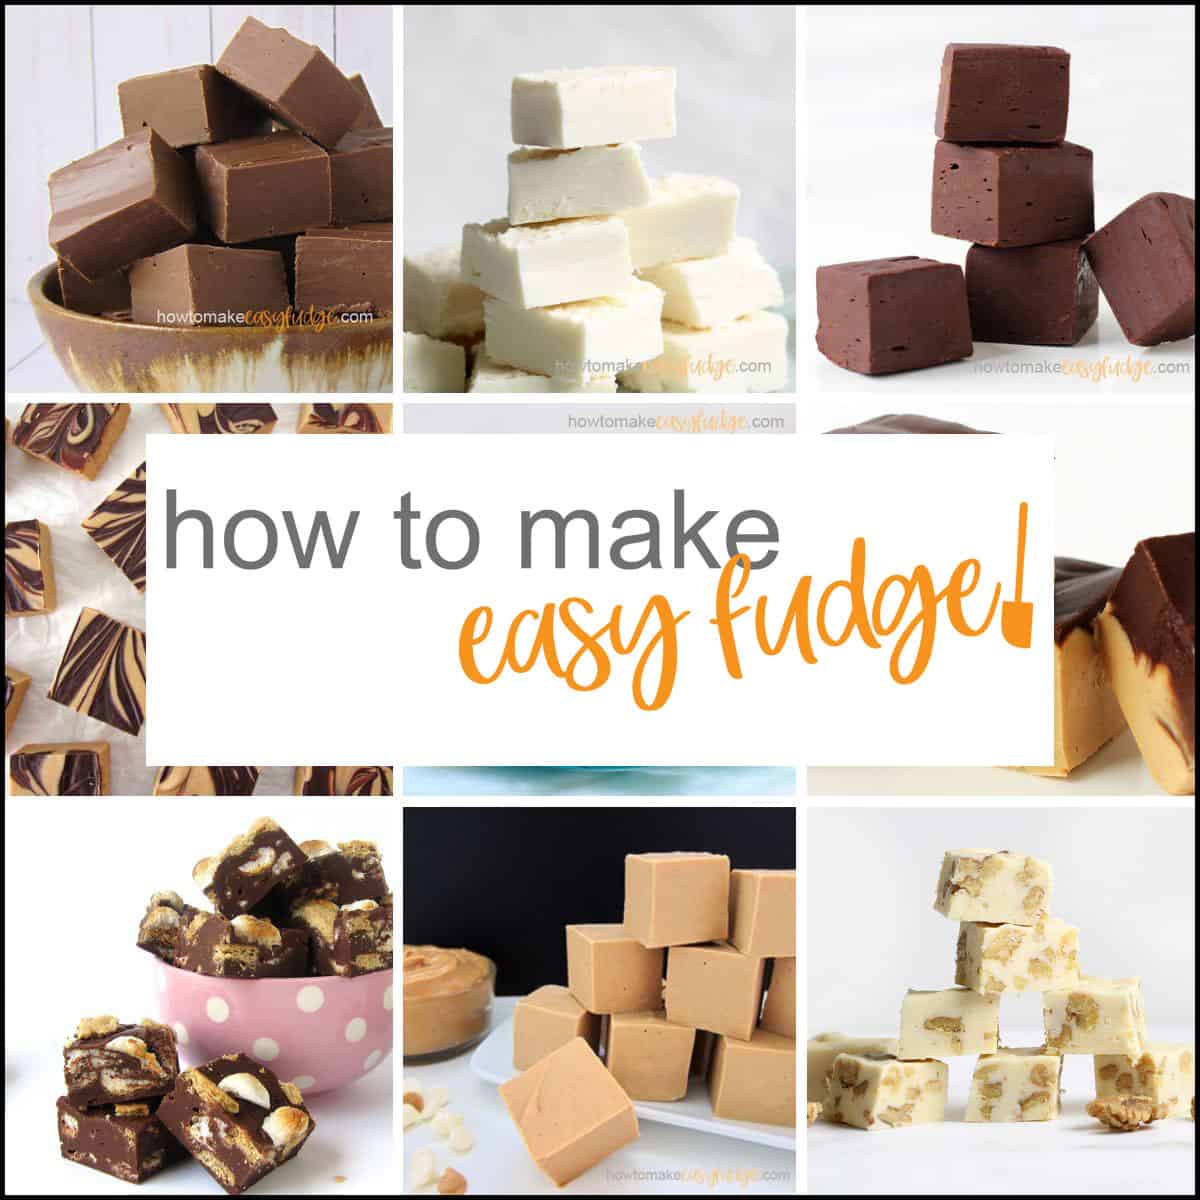 How to make easy fudge collage of homemade fudge